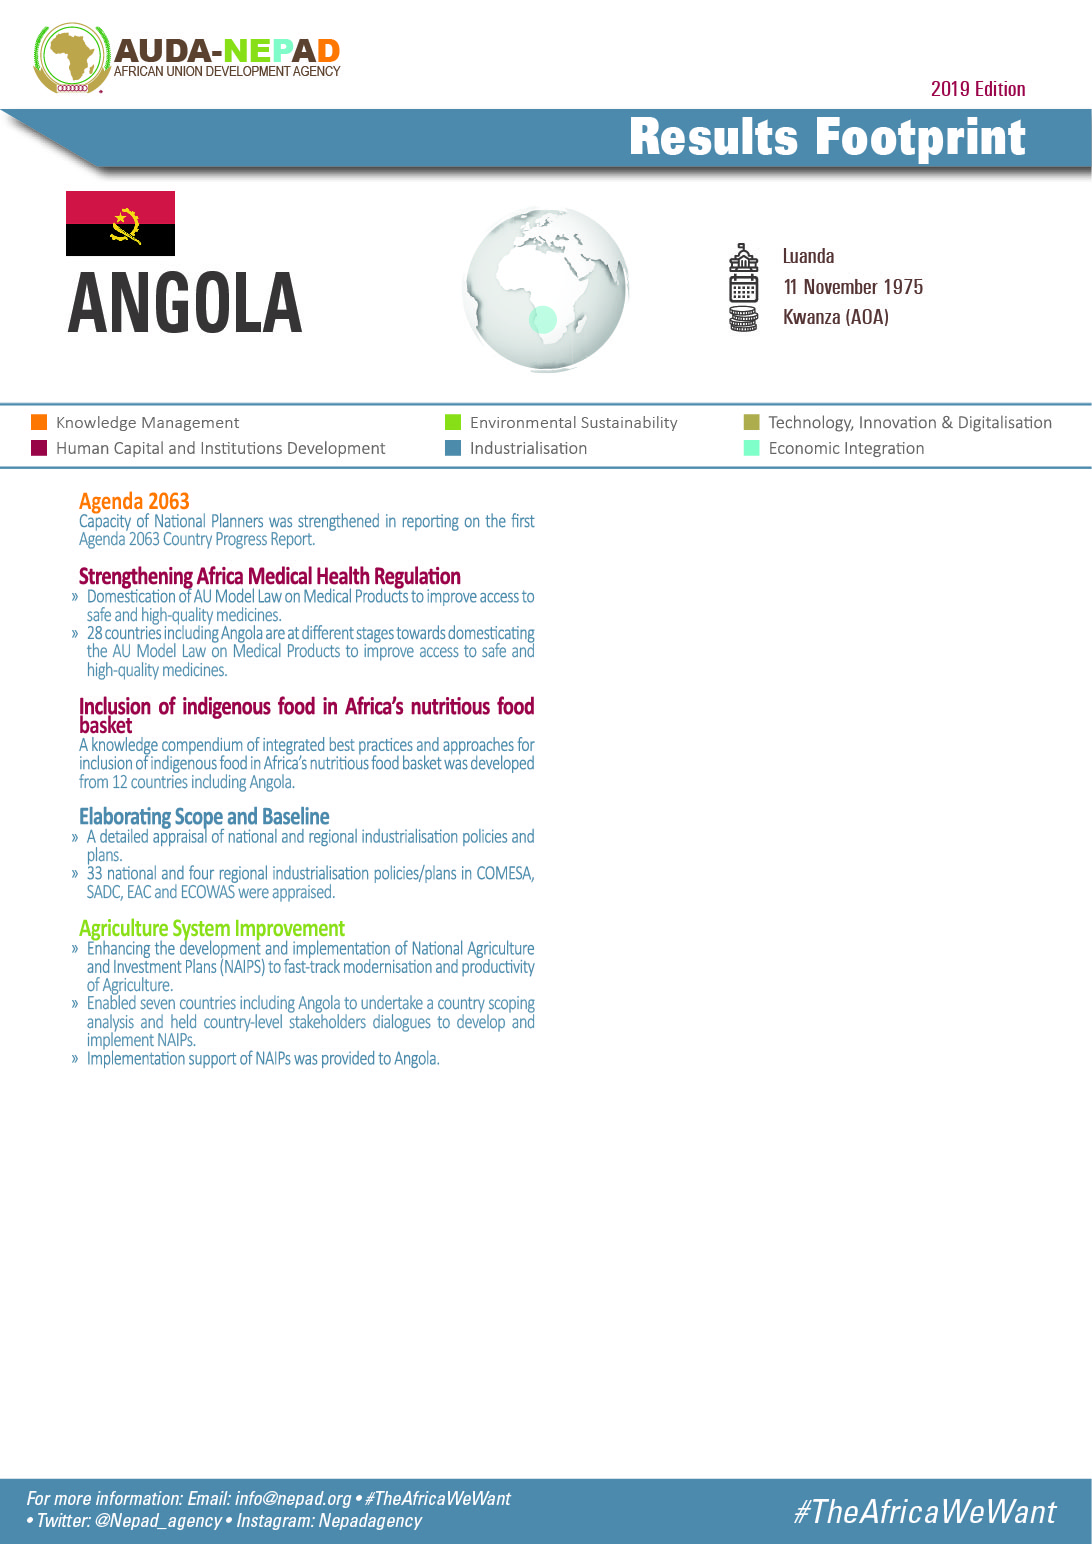 2019 AUDA-NEPAD Footprint: Country Profiles: Angola